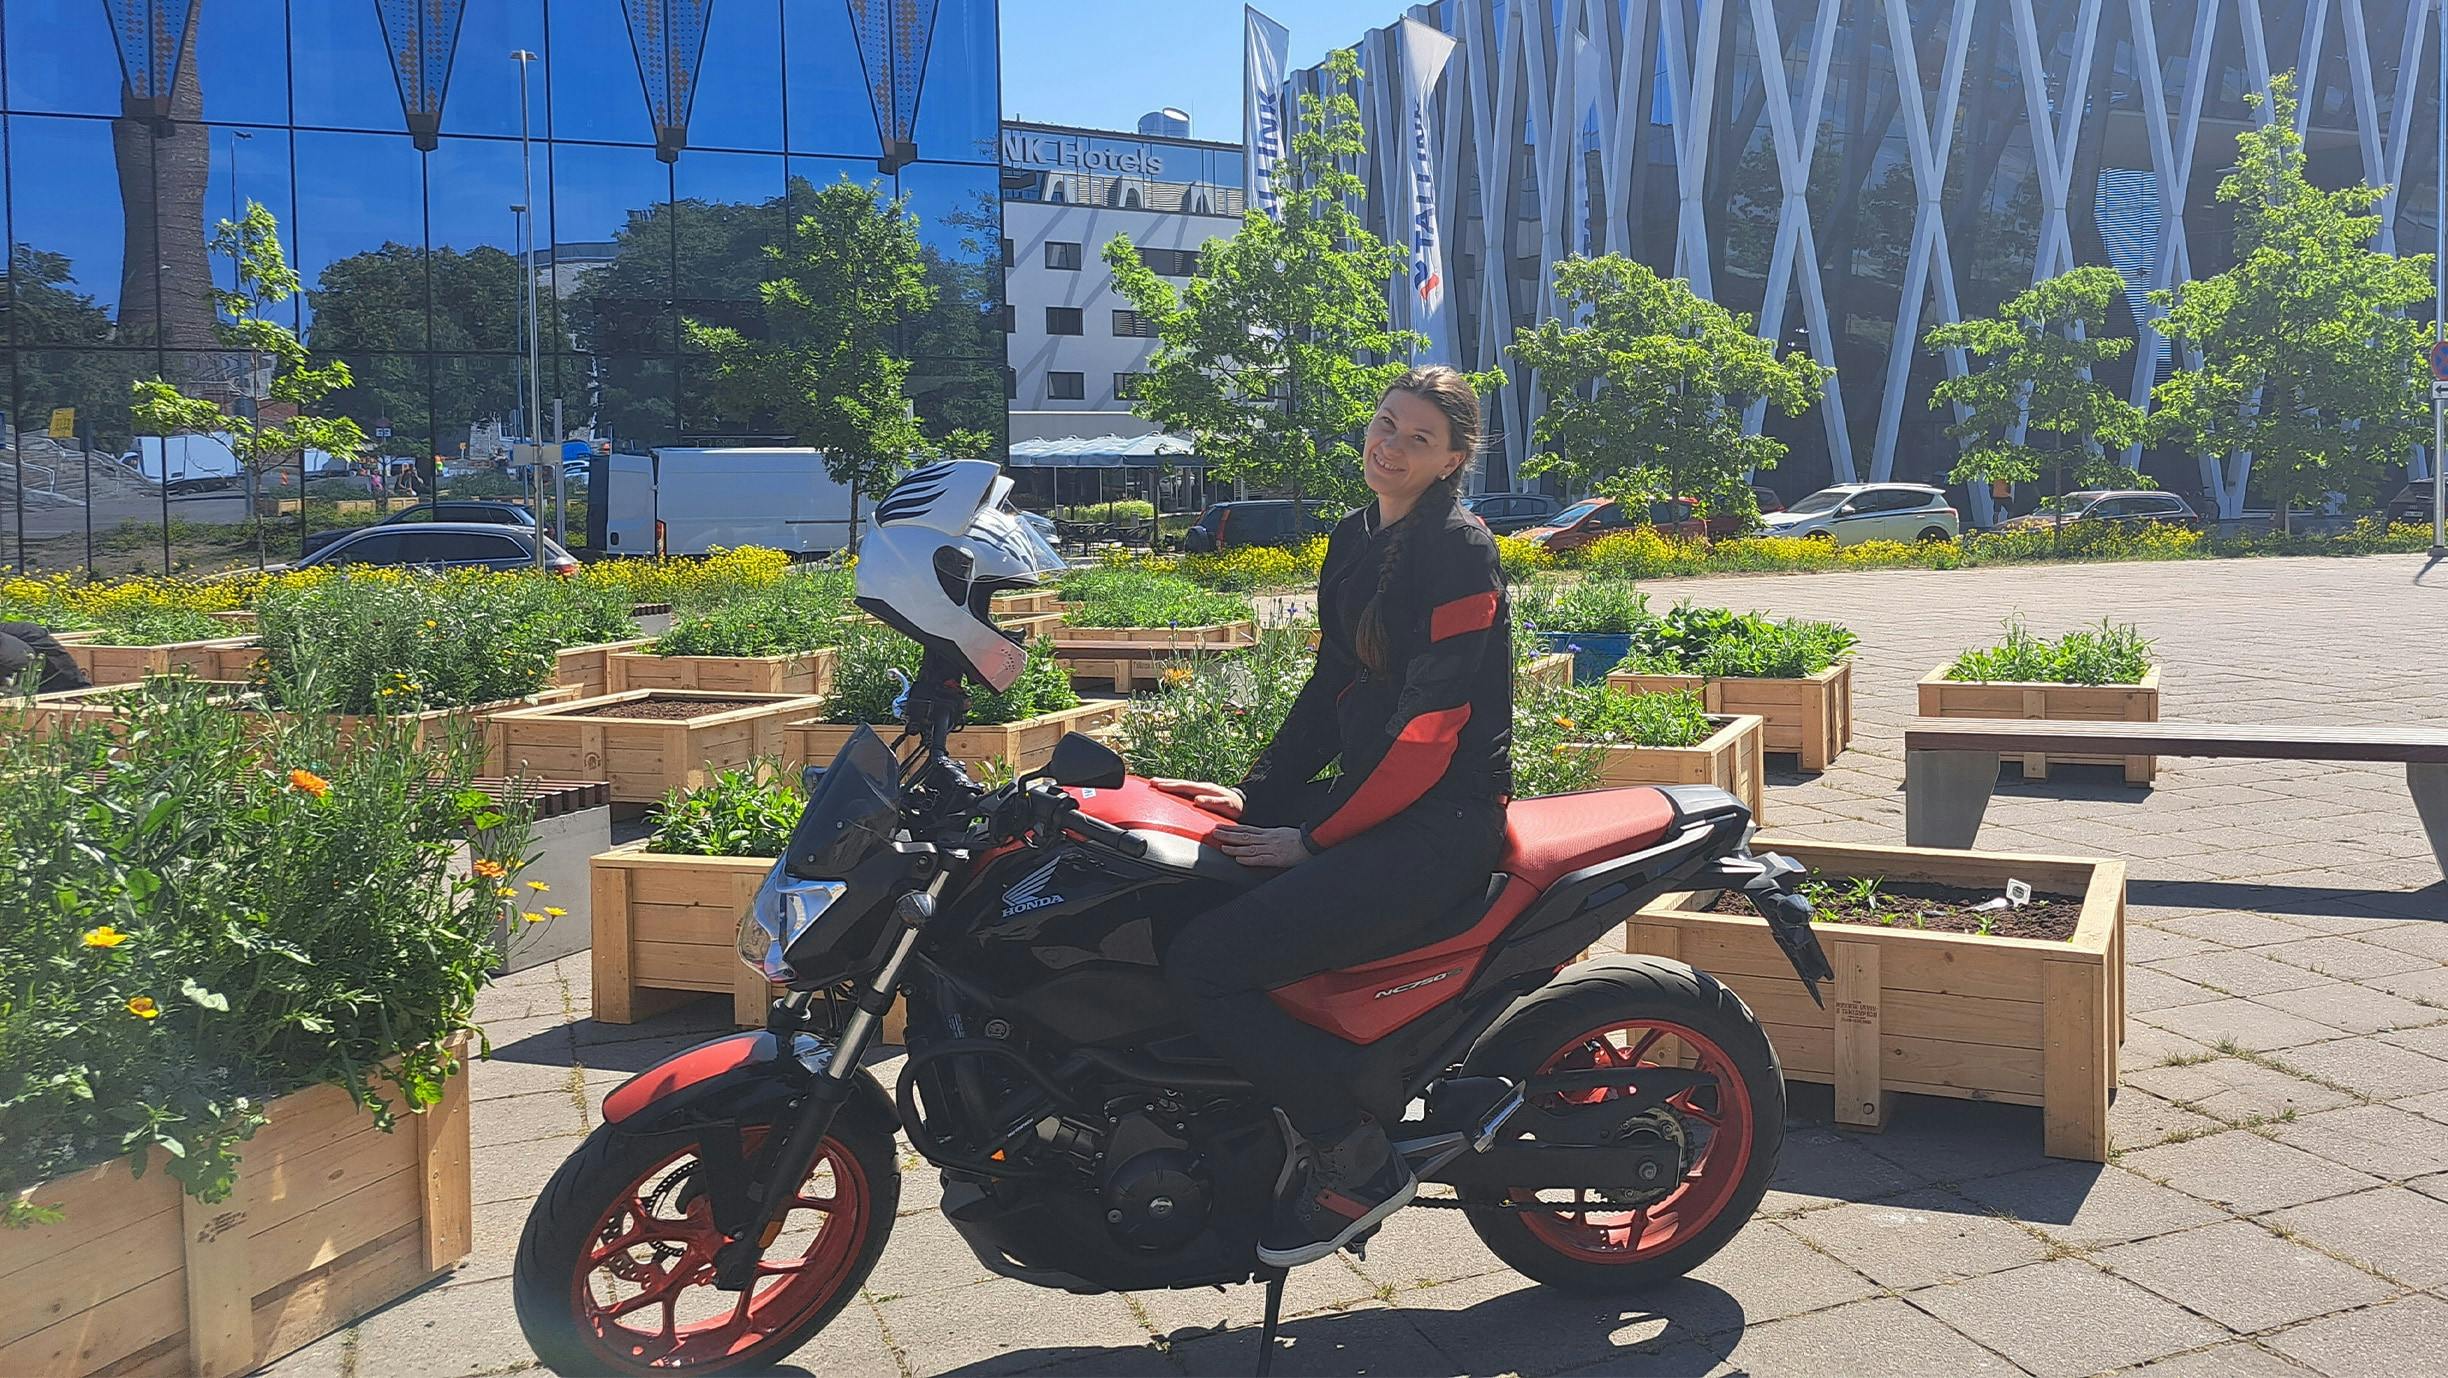 Jana Mitunevitš with a motorcycle